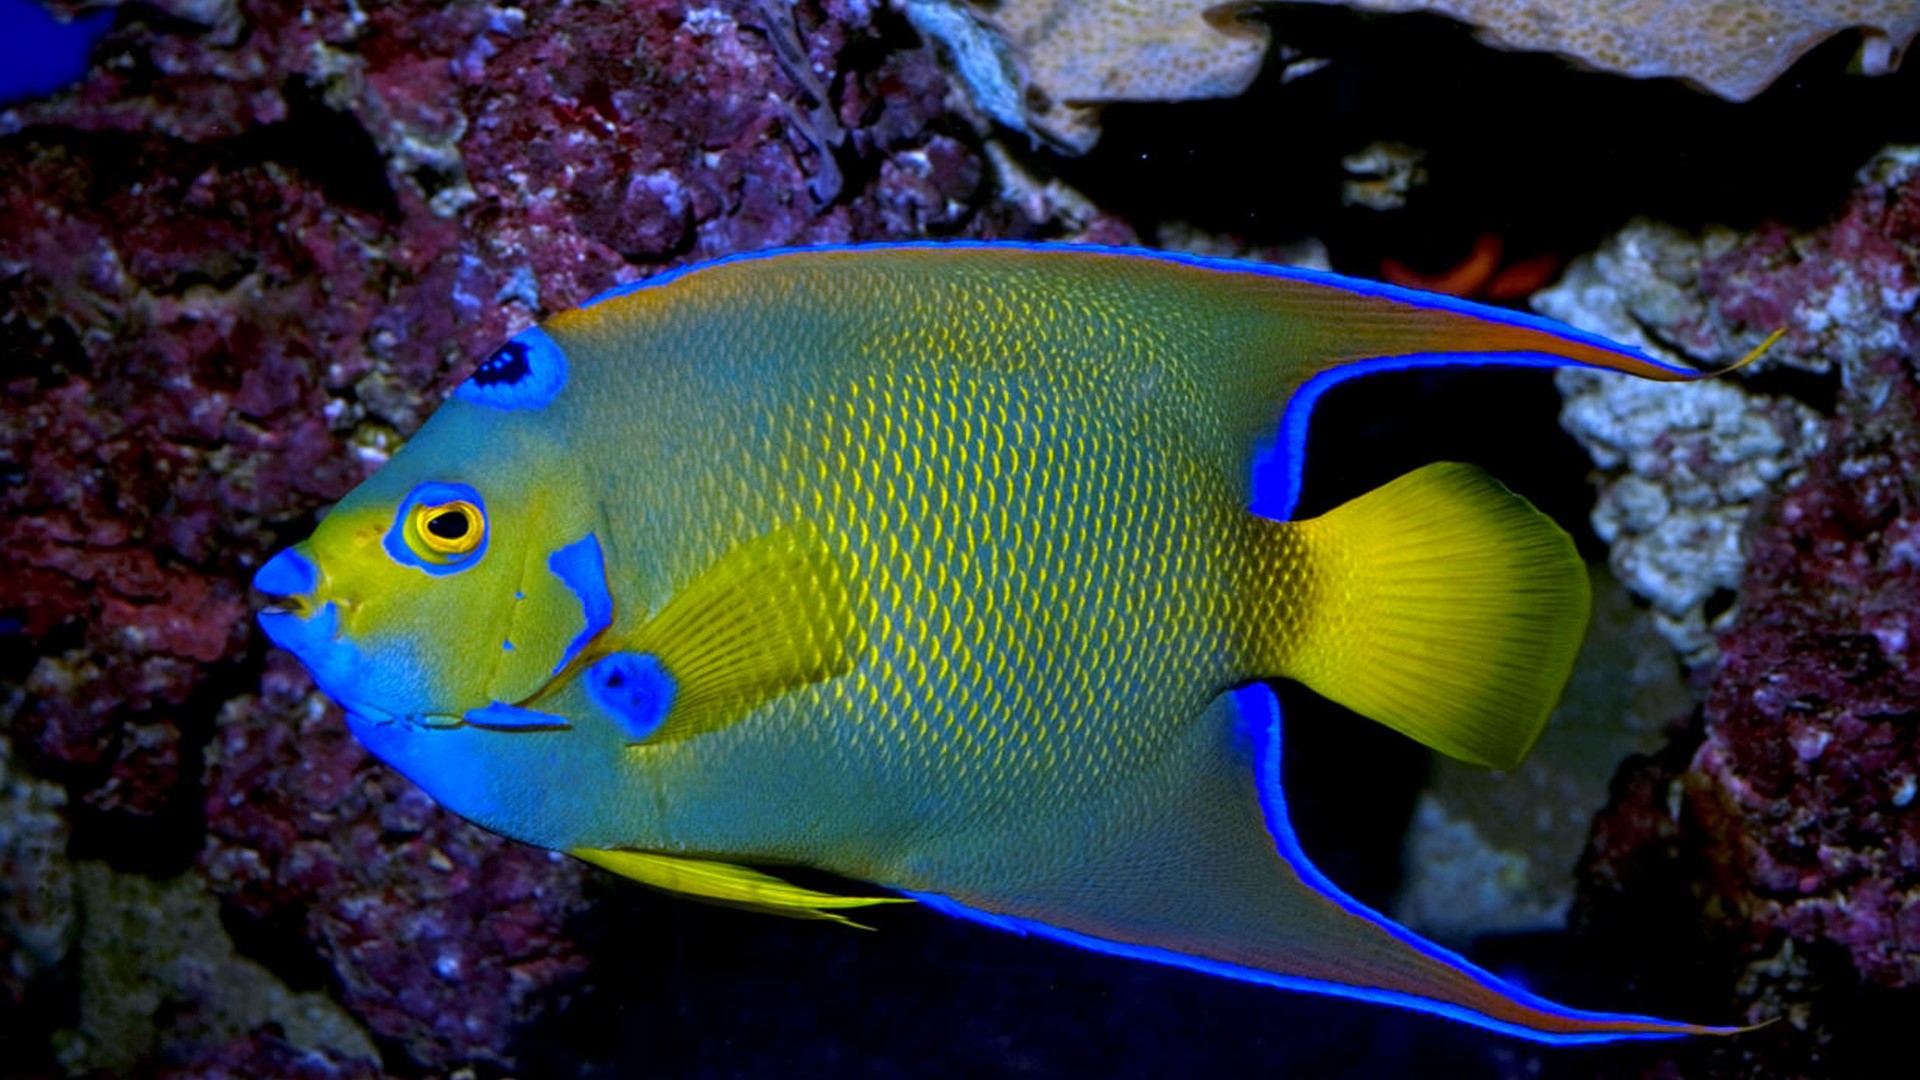 Queen Angelfish Exotic Marine Fish Wallpaper HD For Laptop Mobile Phone, Wallpaper13.com